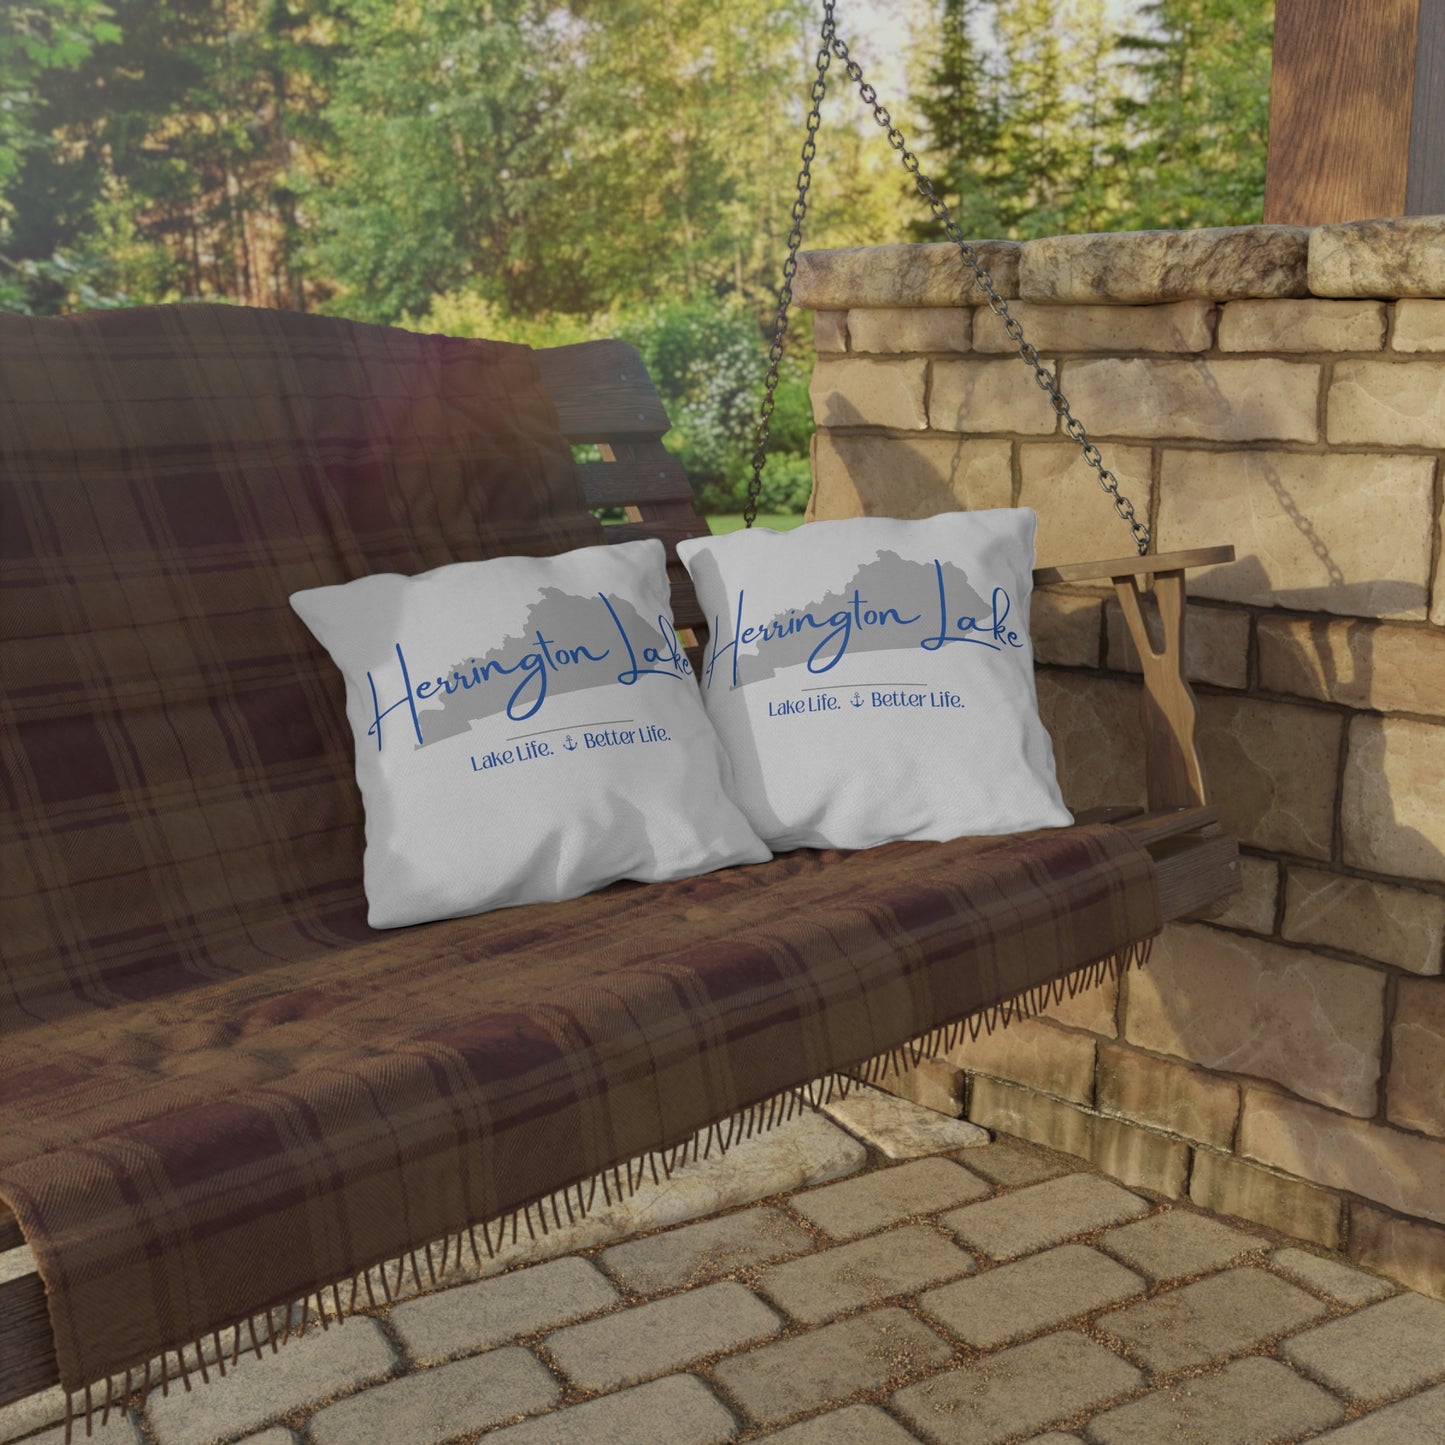 Herrington Lake Signature Collection Outdoor Pillows (White)